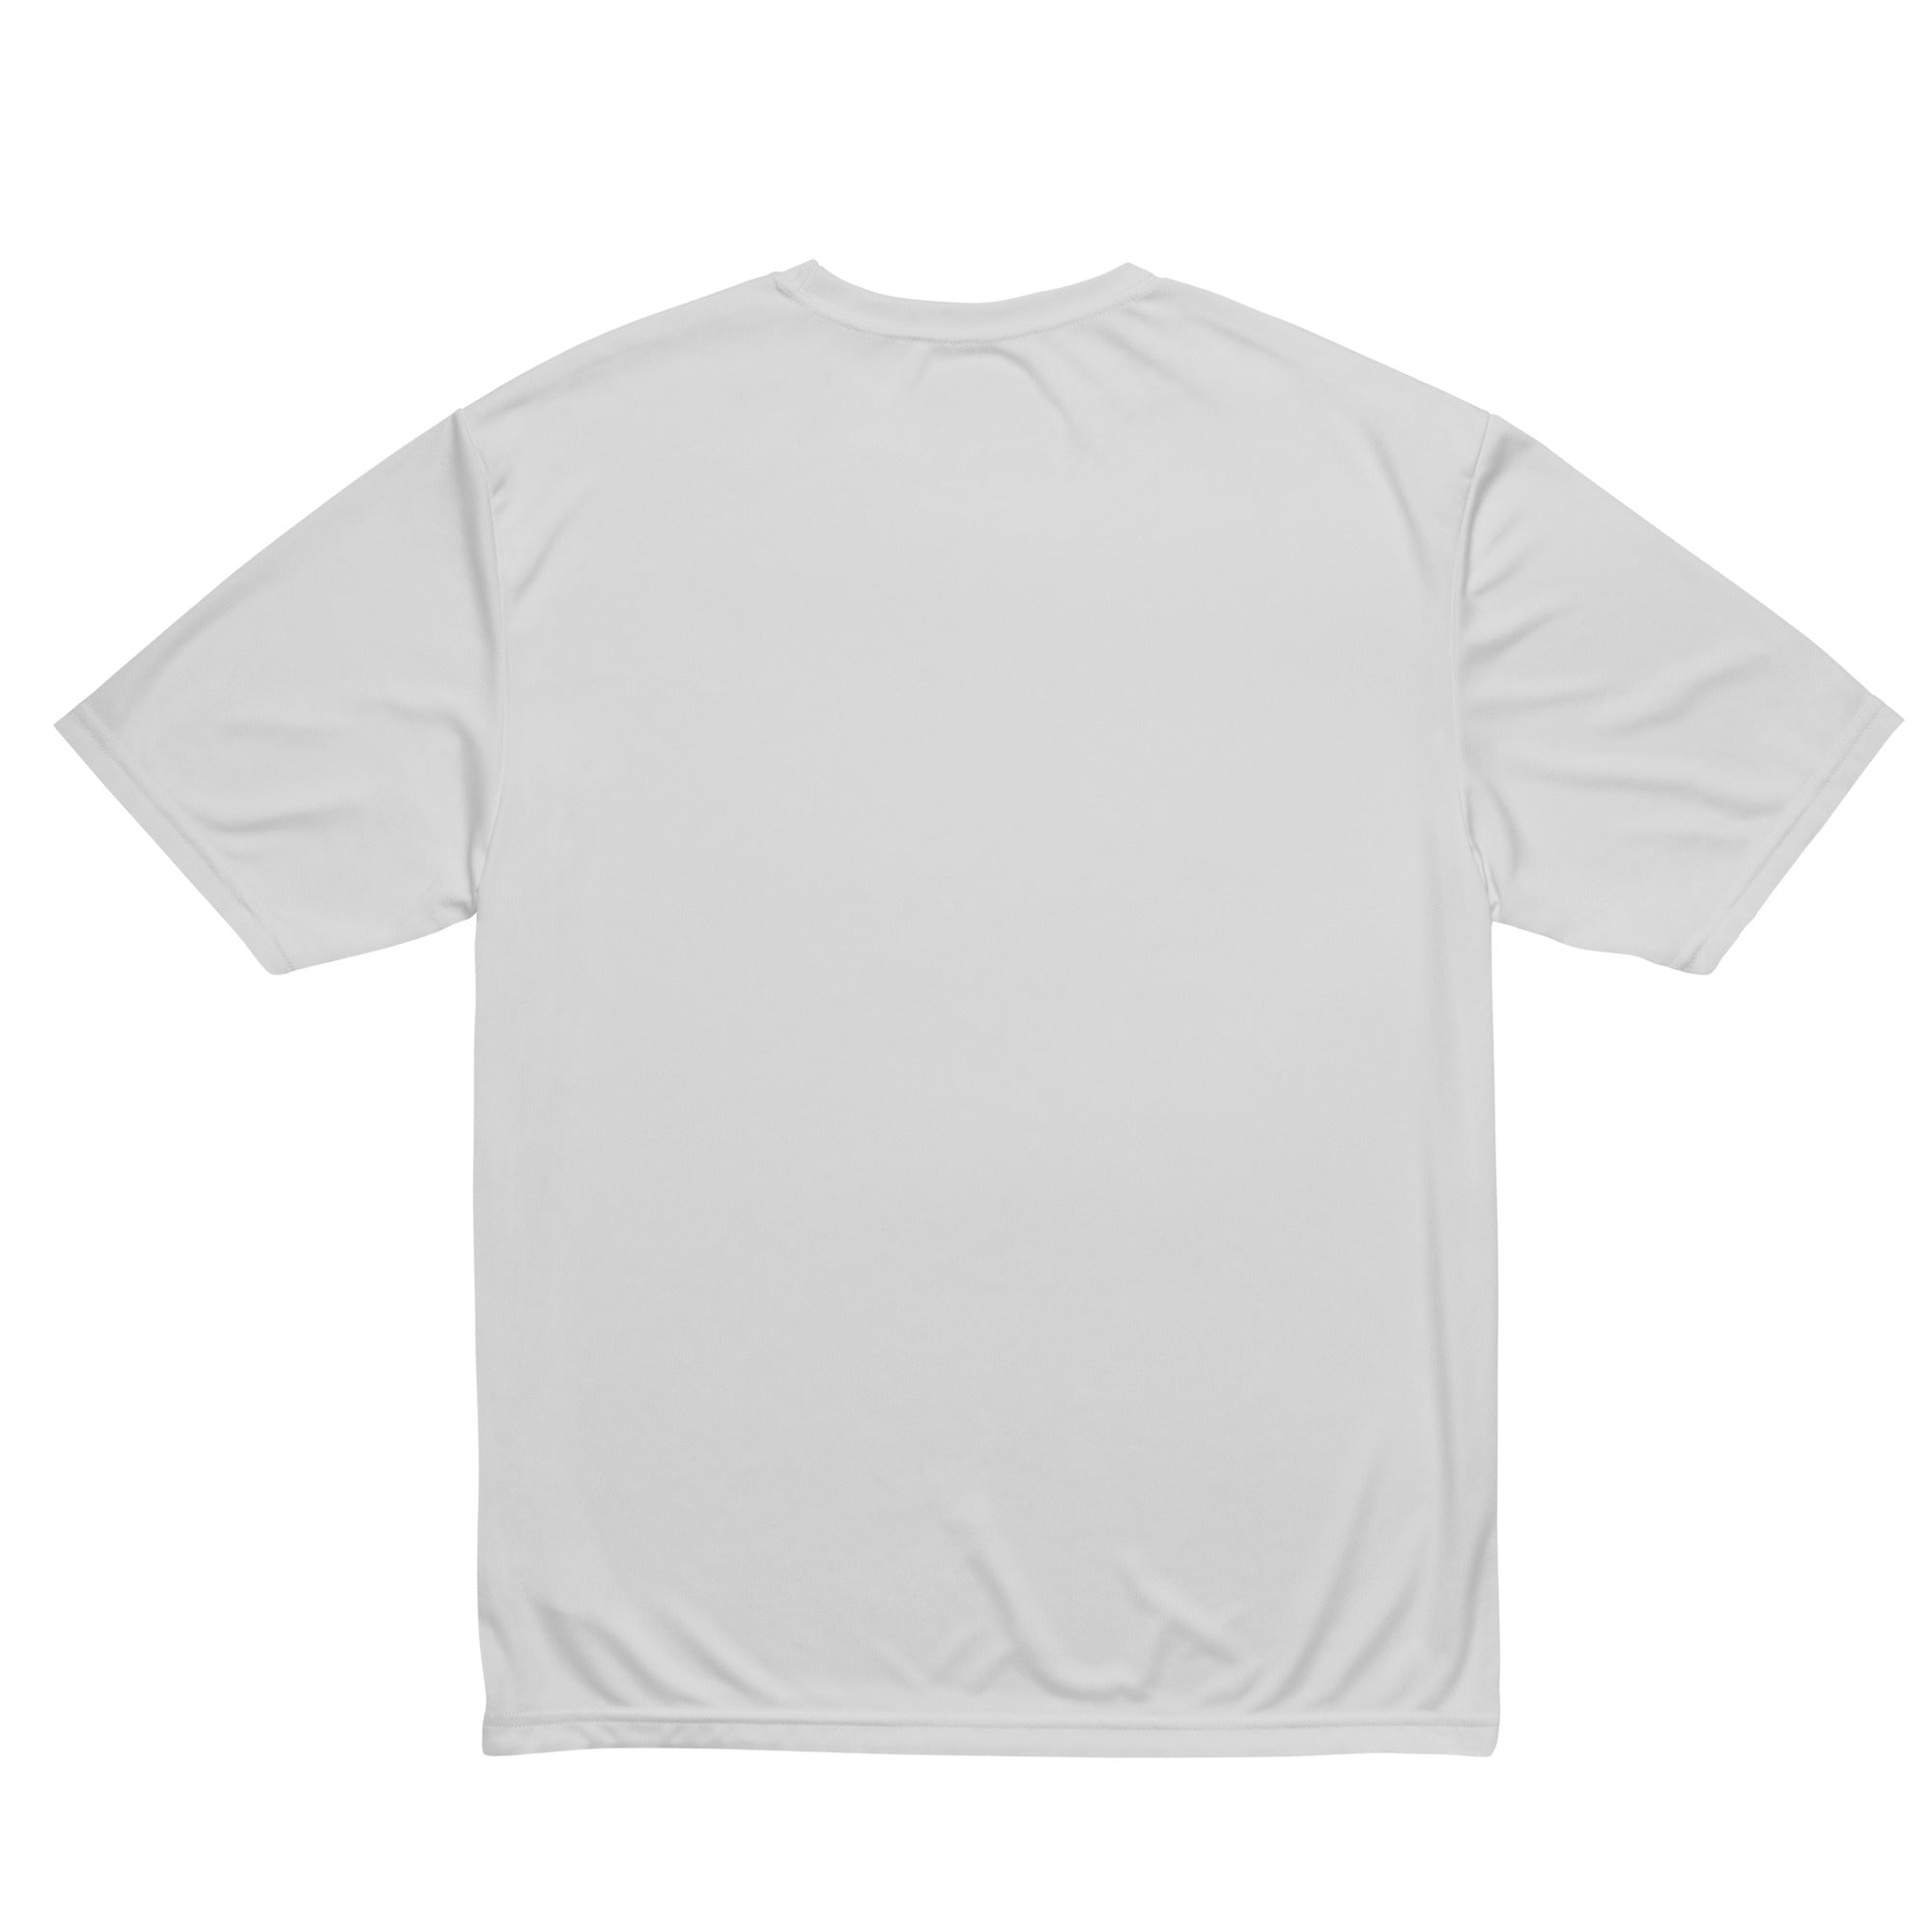 Tampa Warriors Baseball Seal Unisex Adult performance crew neck t-shirt